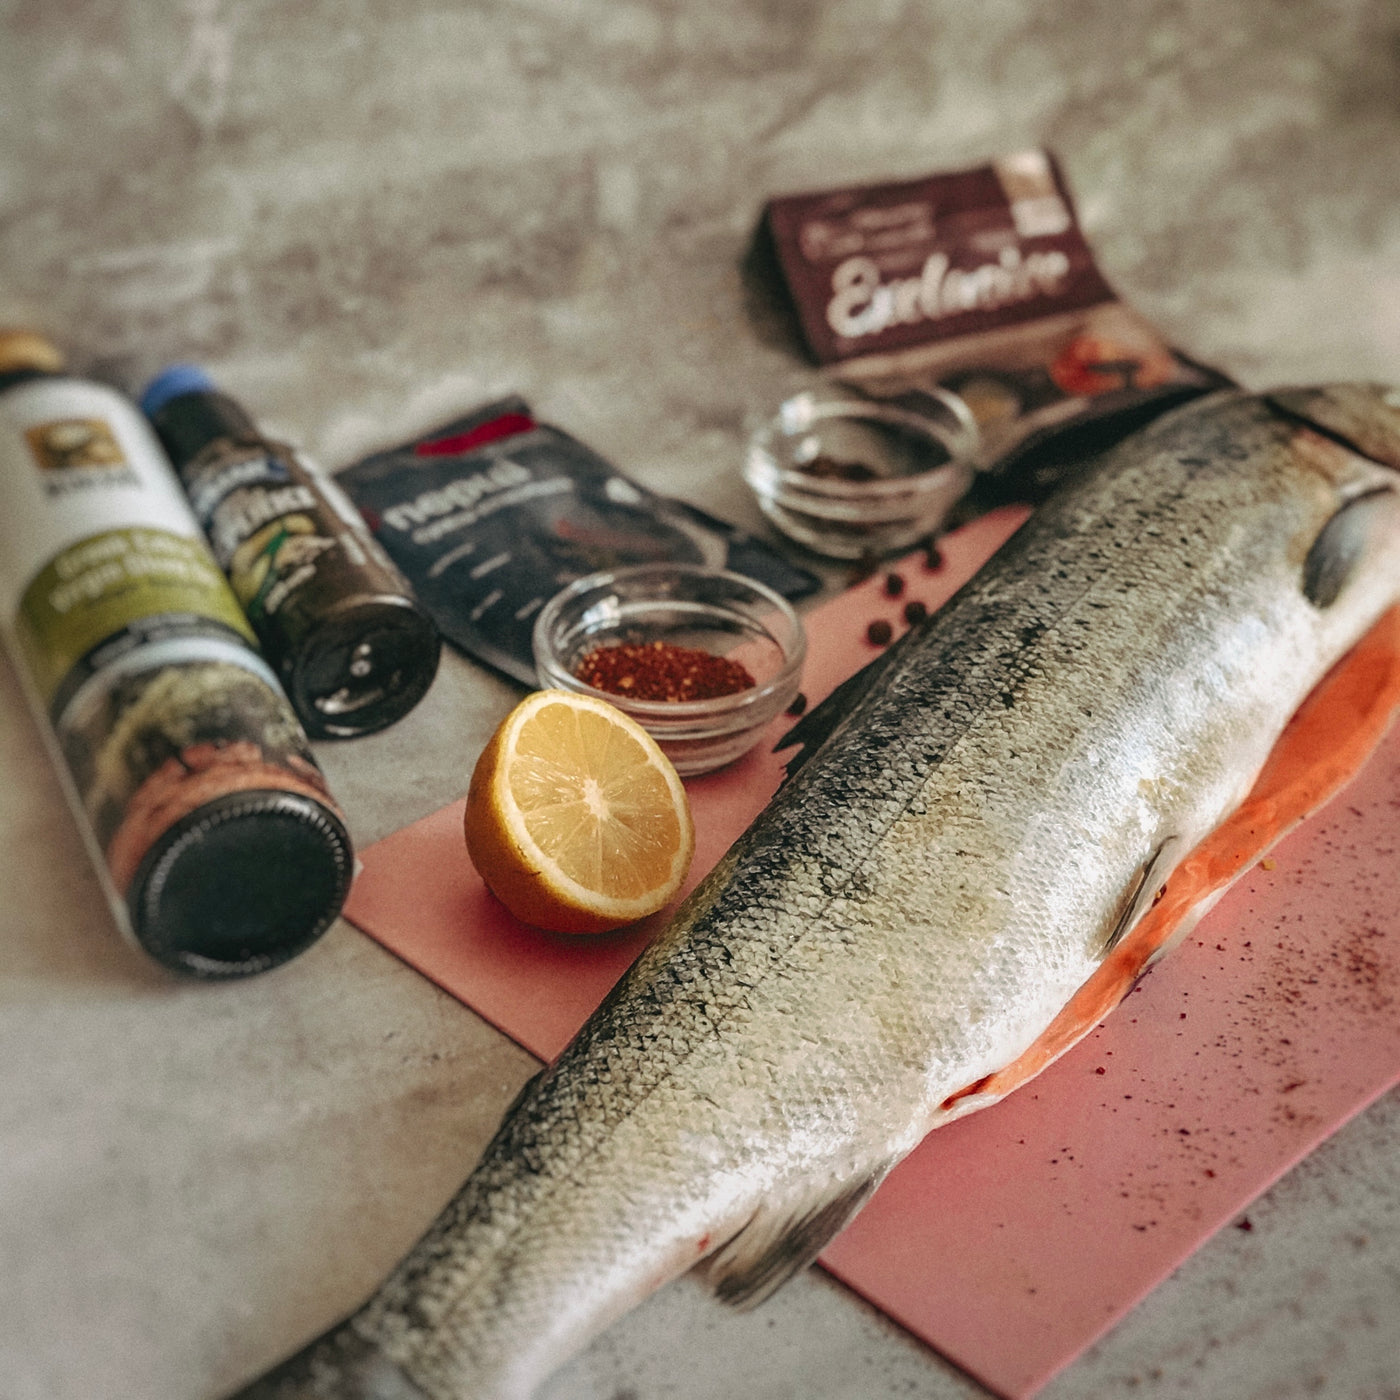 Salmon Whole Fresh | Norway | +/-5.5kg